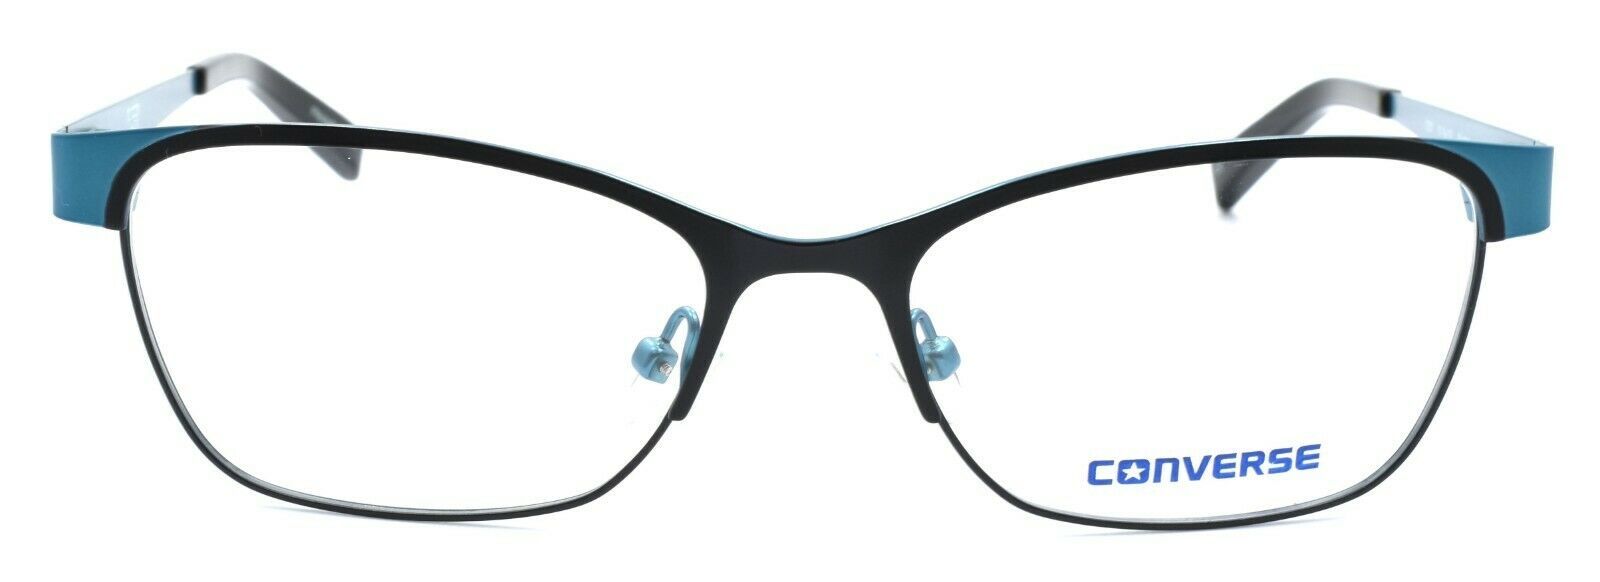 2-CONVERSE Q030 UF Women's Eyeglasses Frames 51-16-135 Black + CASE-751286264821-IKSpecs